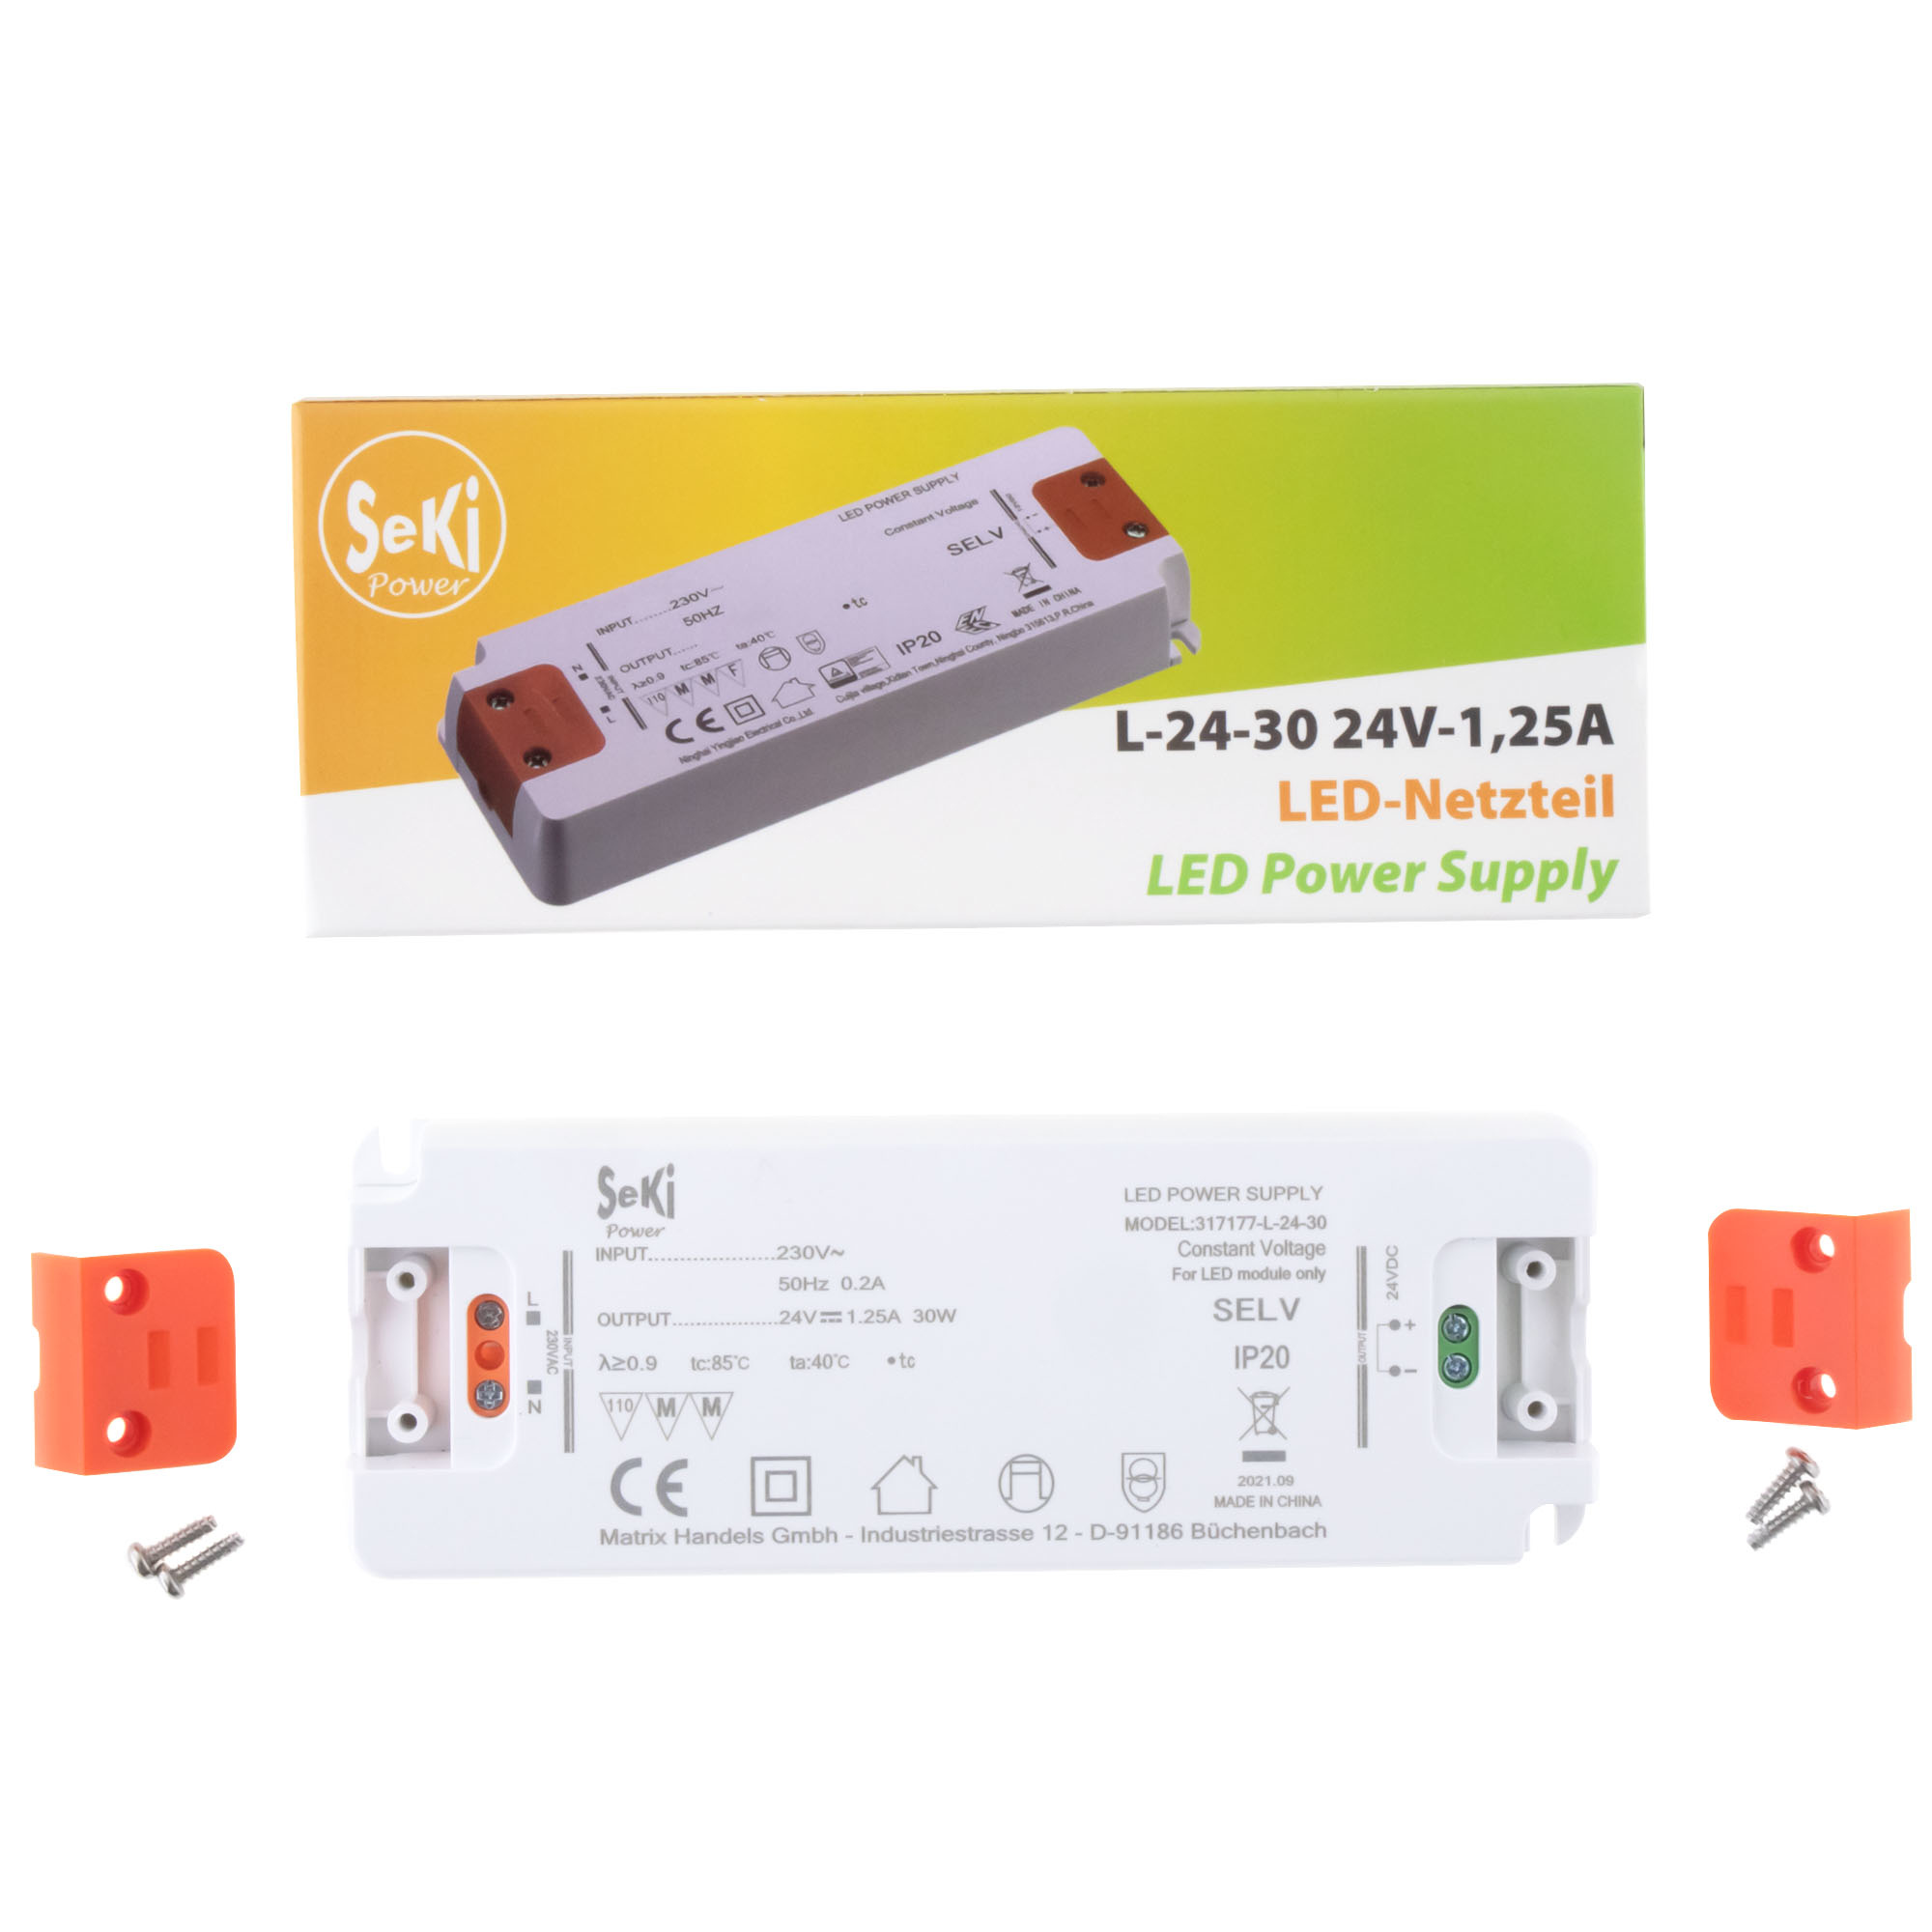 LED-Netzteil L-24-30 - 24V - 1,25A - 30W